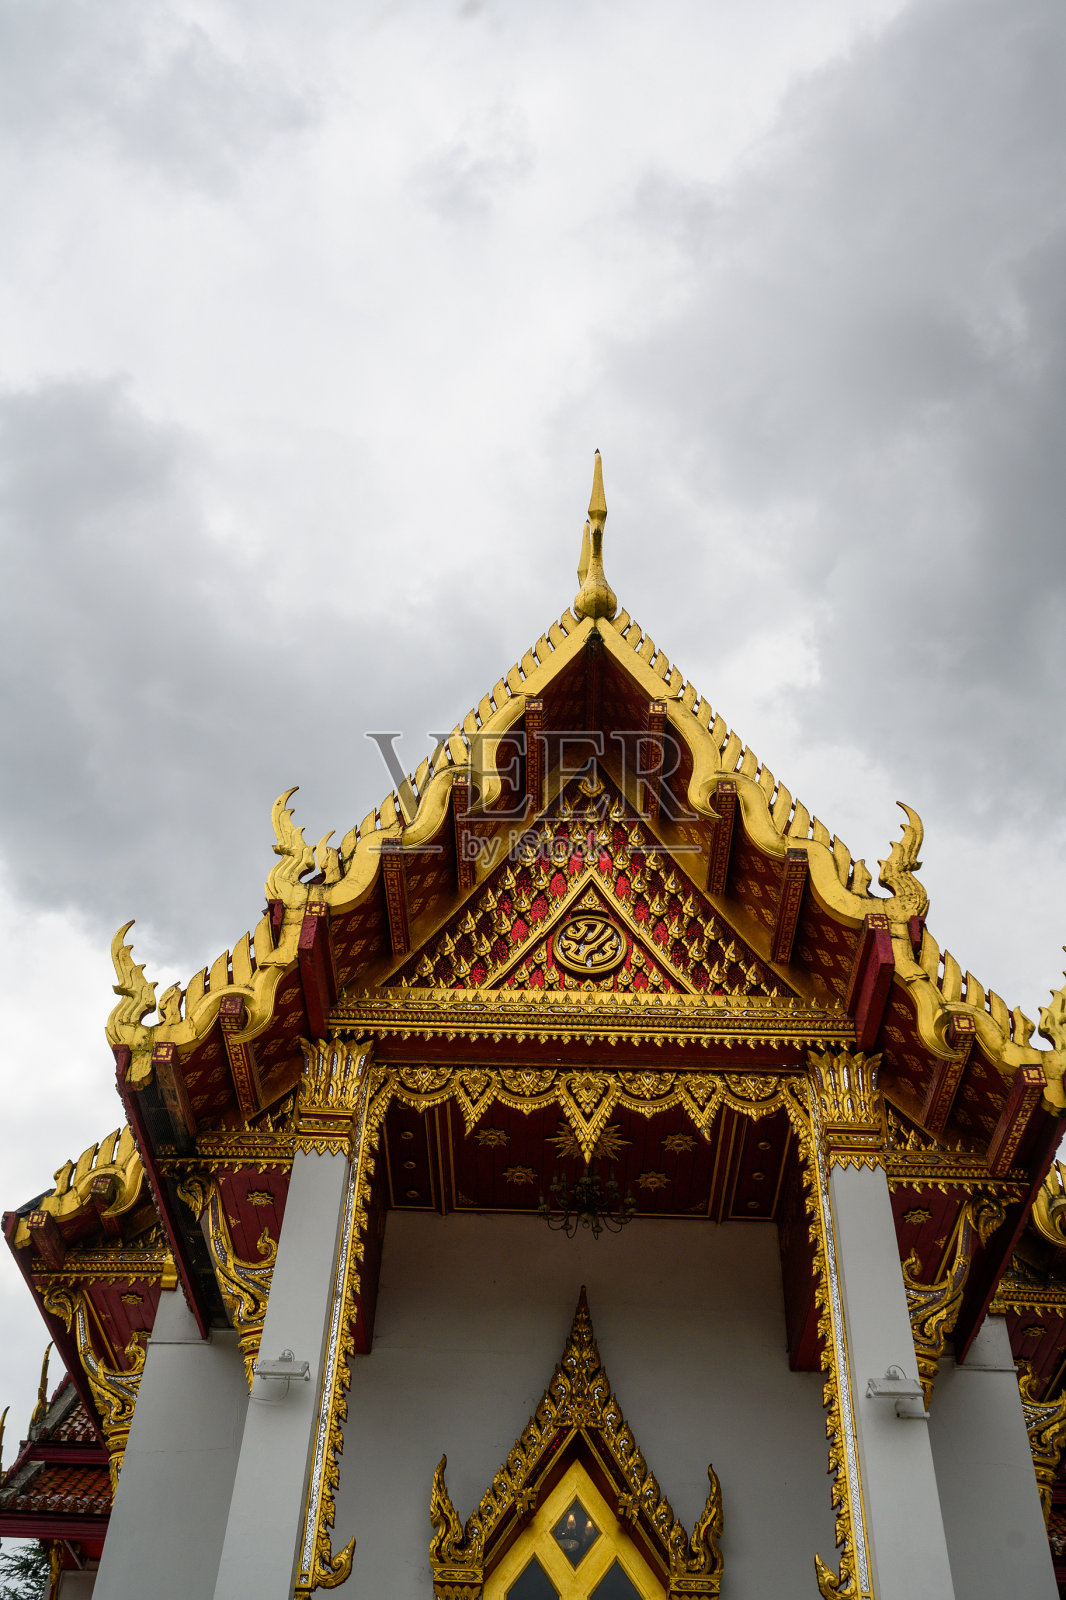 Wat有佛教-帕帕帕帕佛得角温布尔登寺照片摄影图片